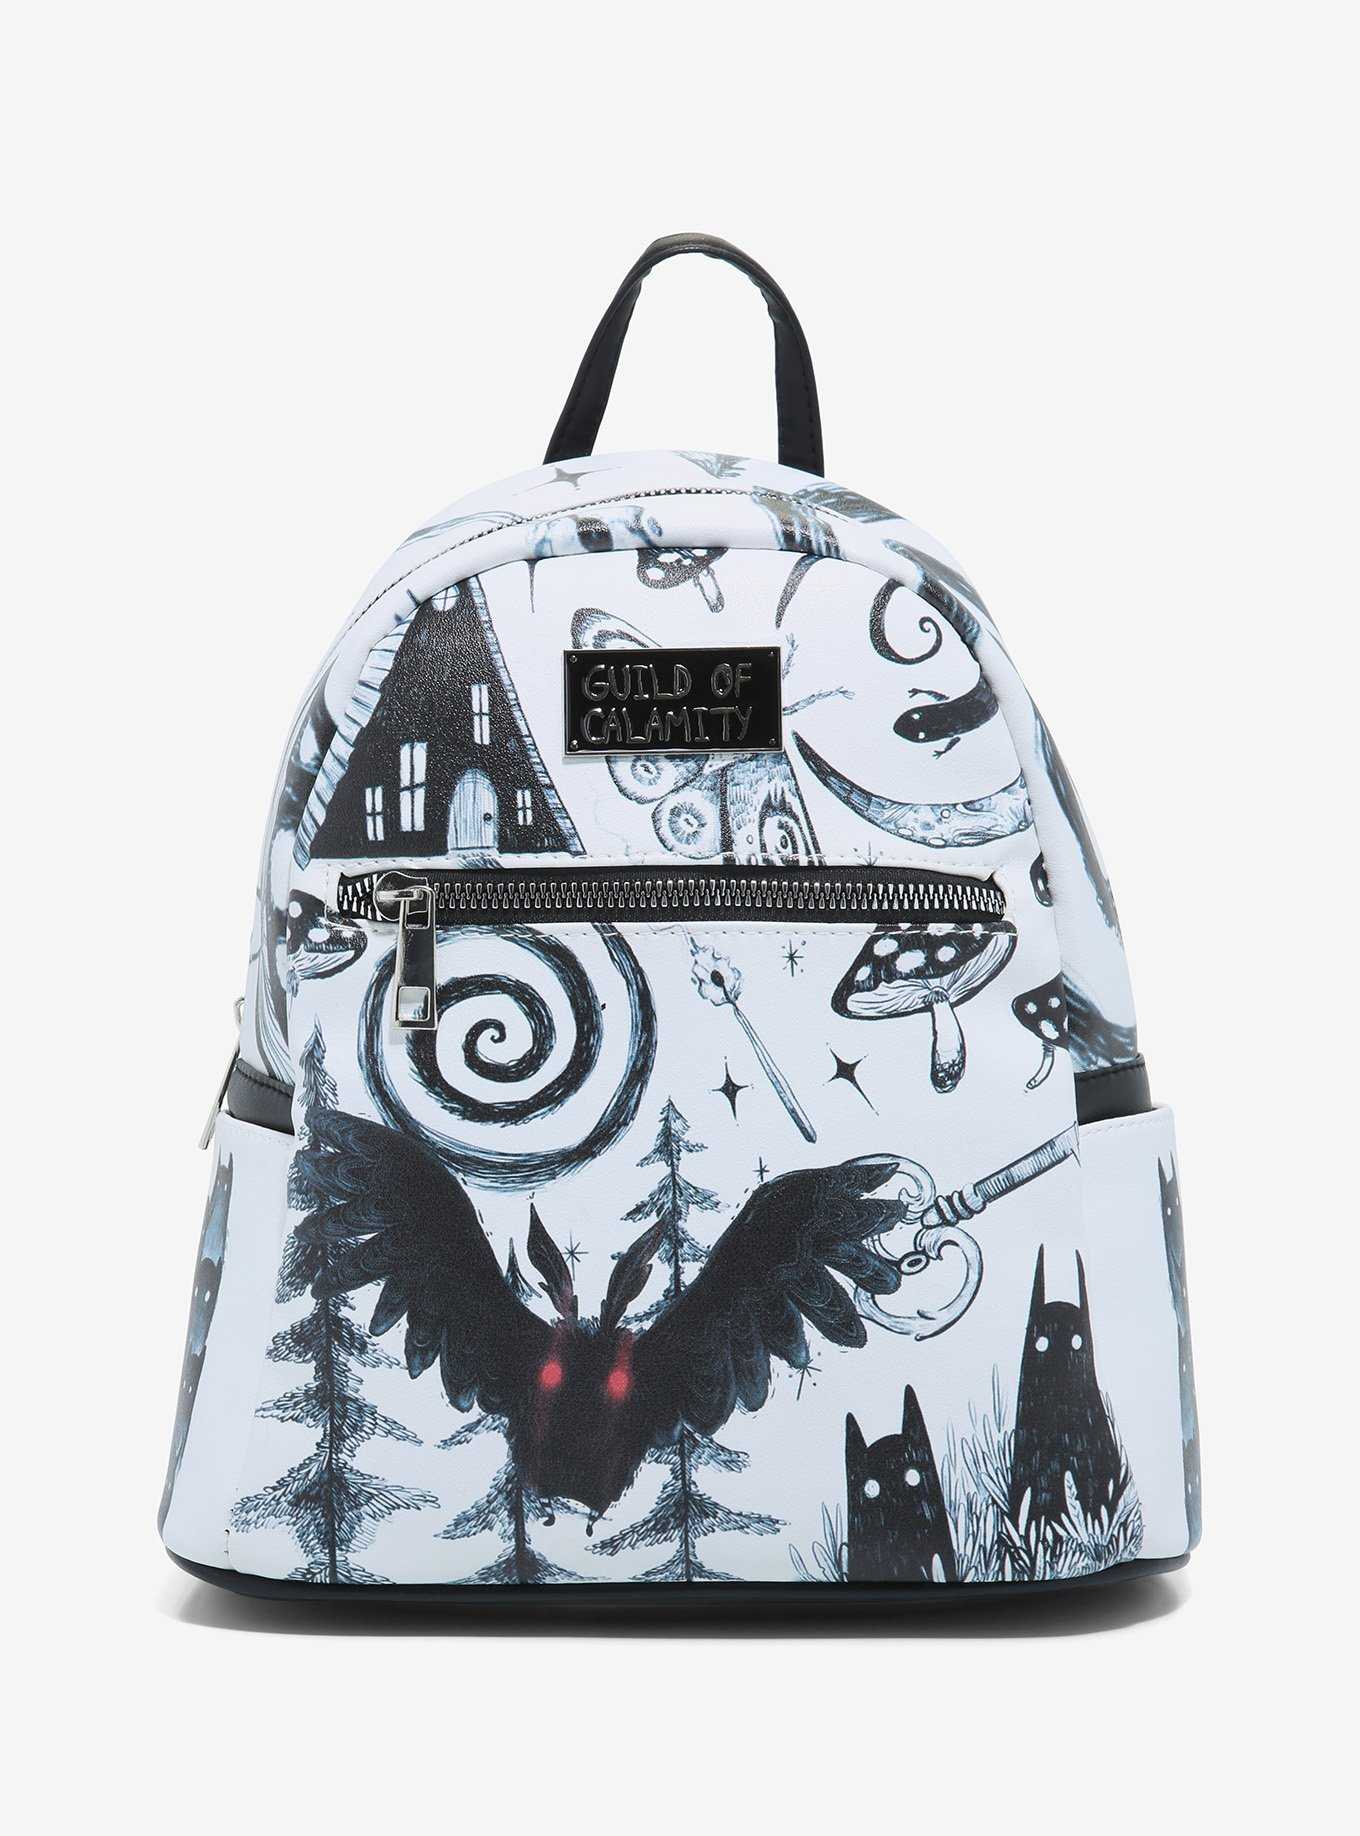 Guild Of Calamity Mothman Mini Backpack, , hi-res